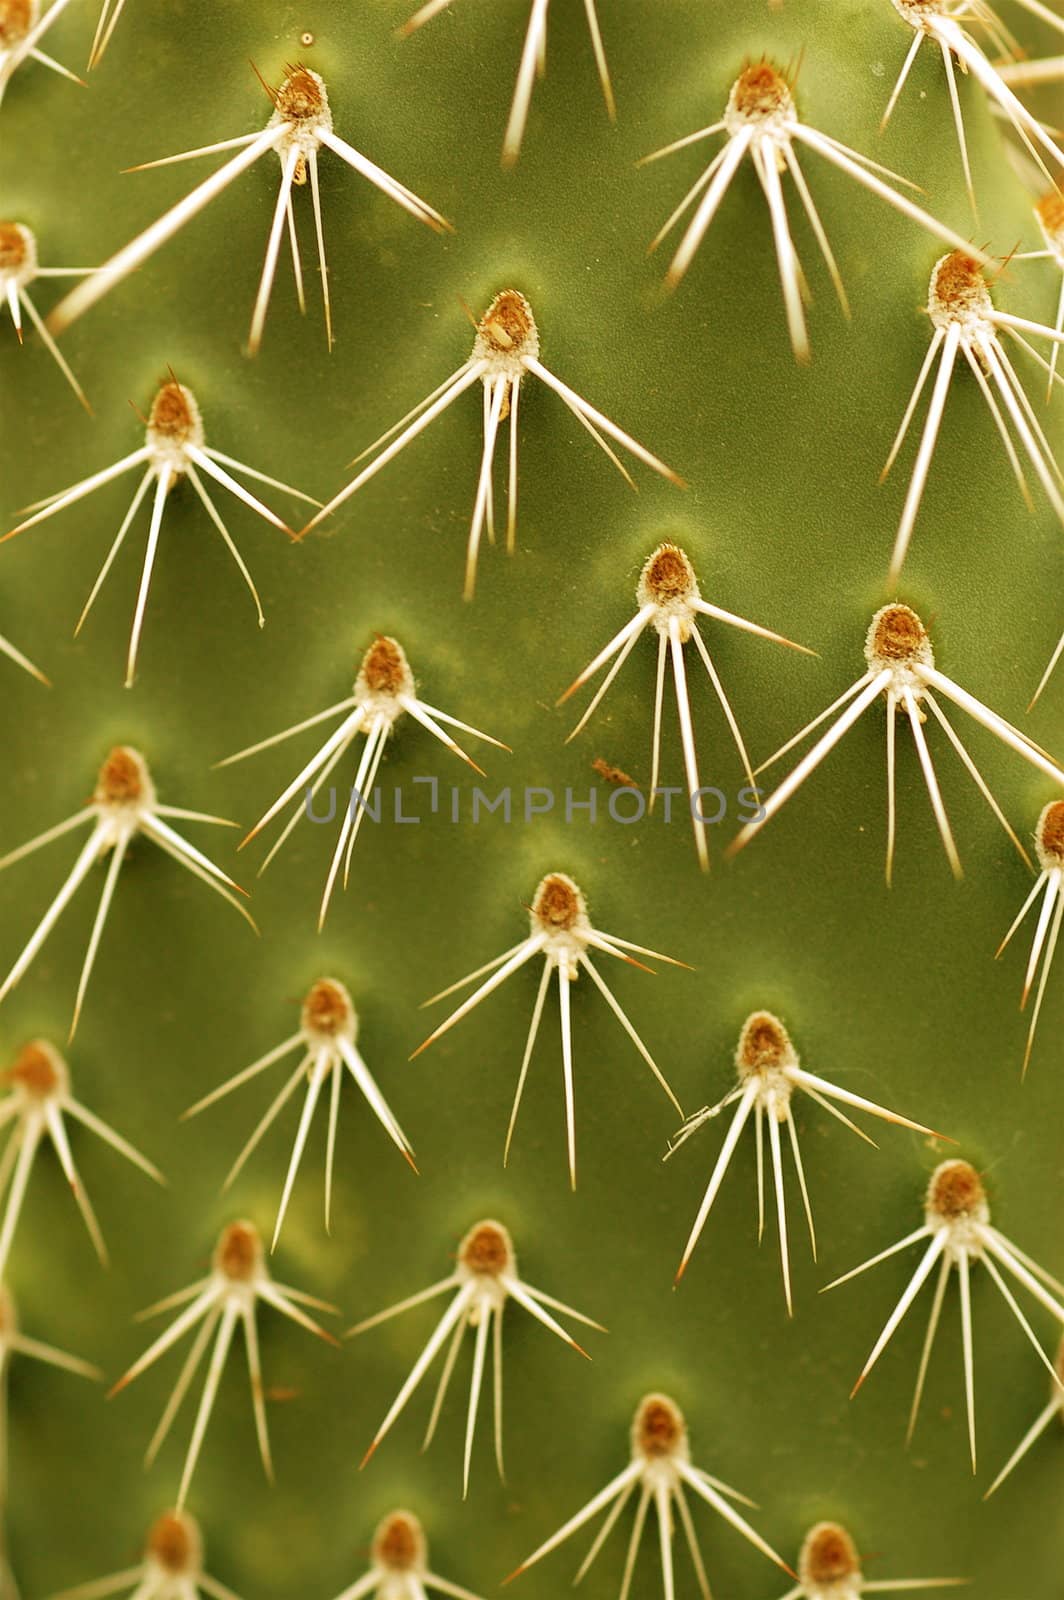 Cactus Spikes by PrincessToula